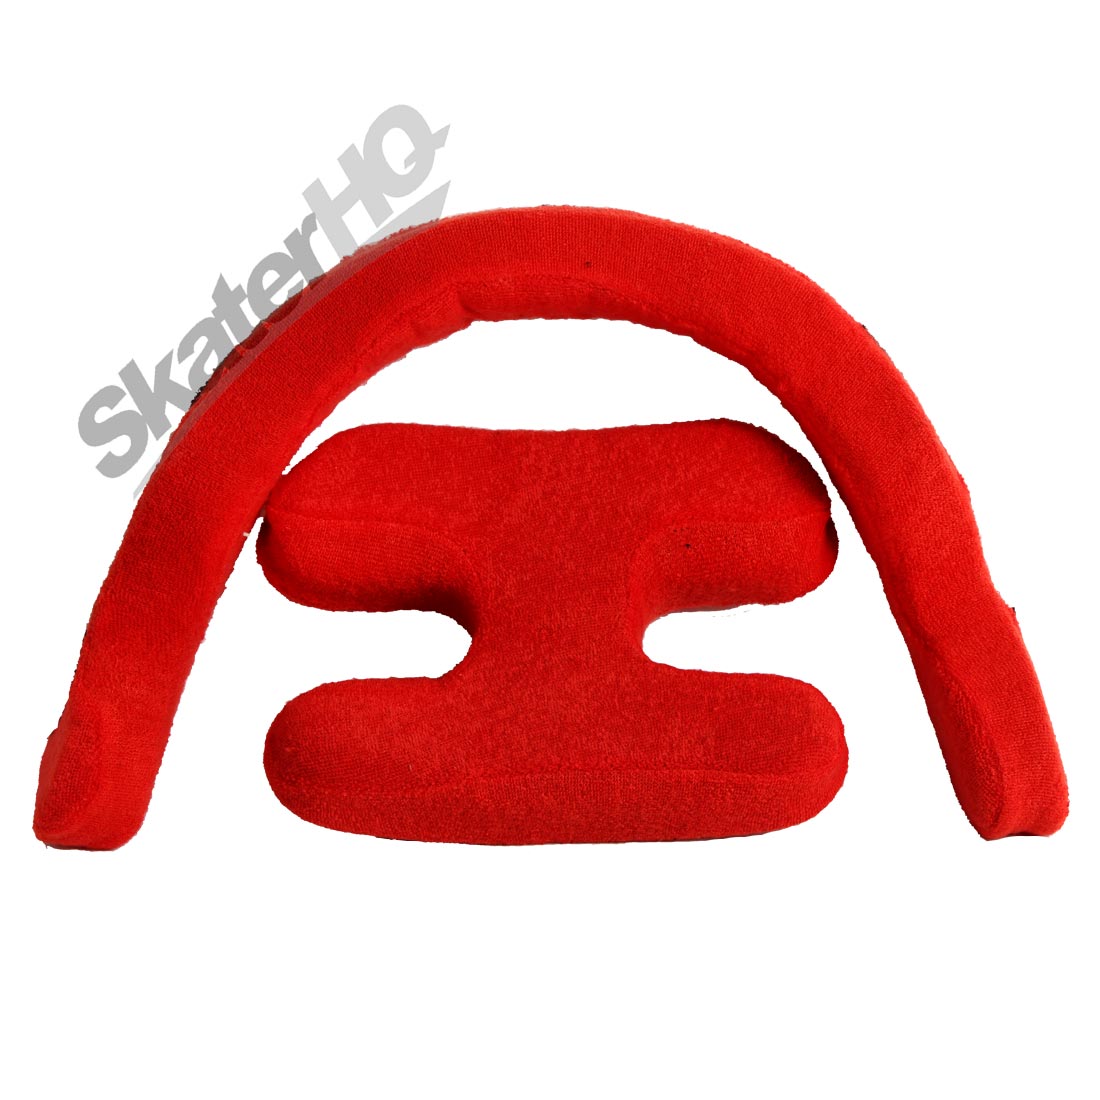 Triple 8 Sweatsaver Liner - Red - XL Helmet liners